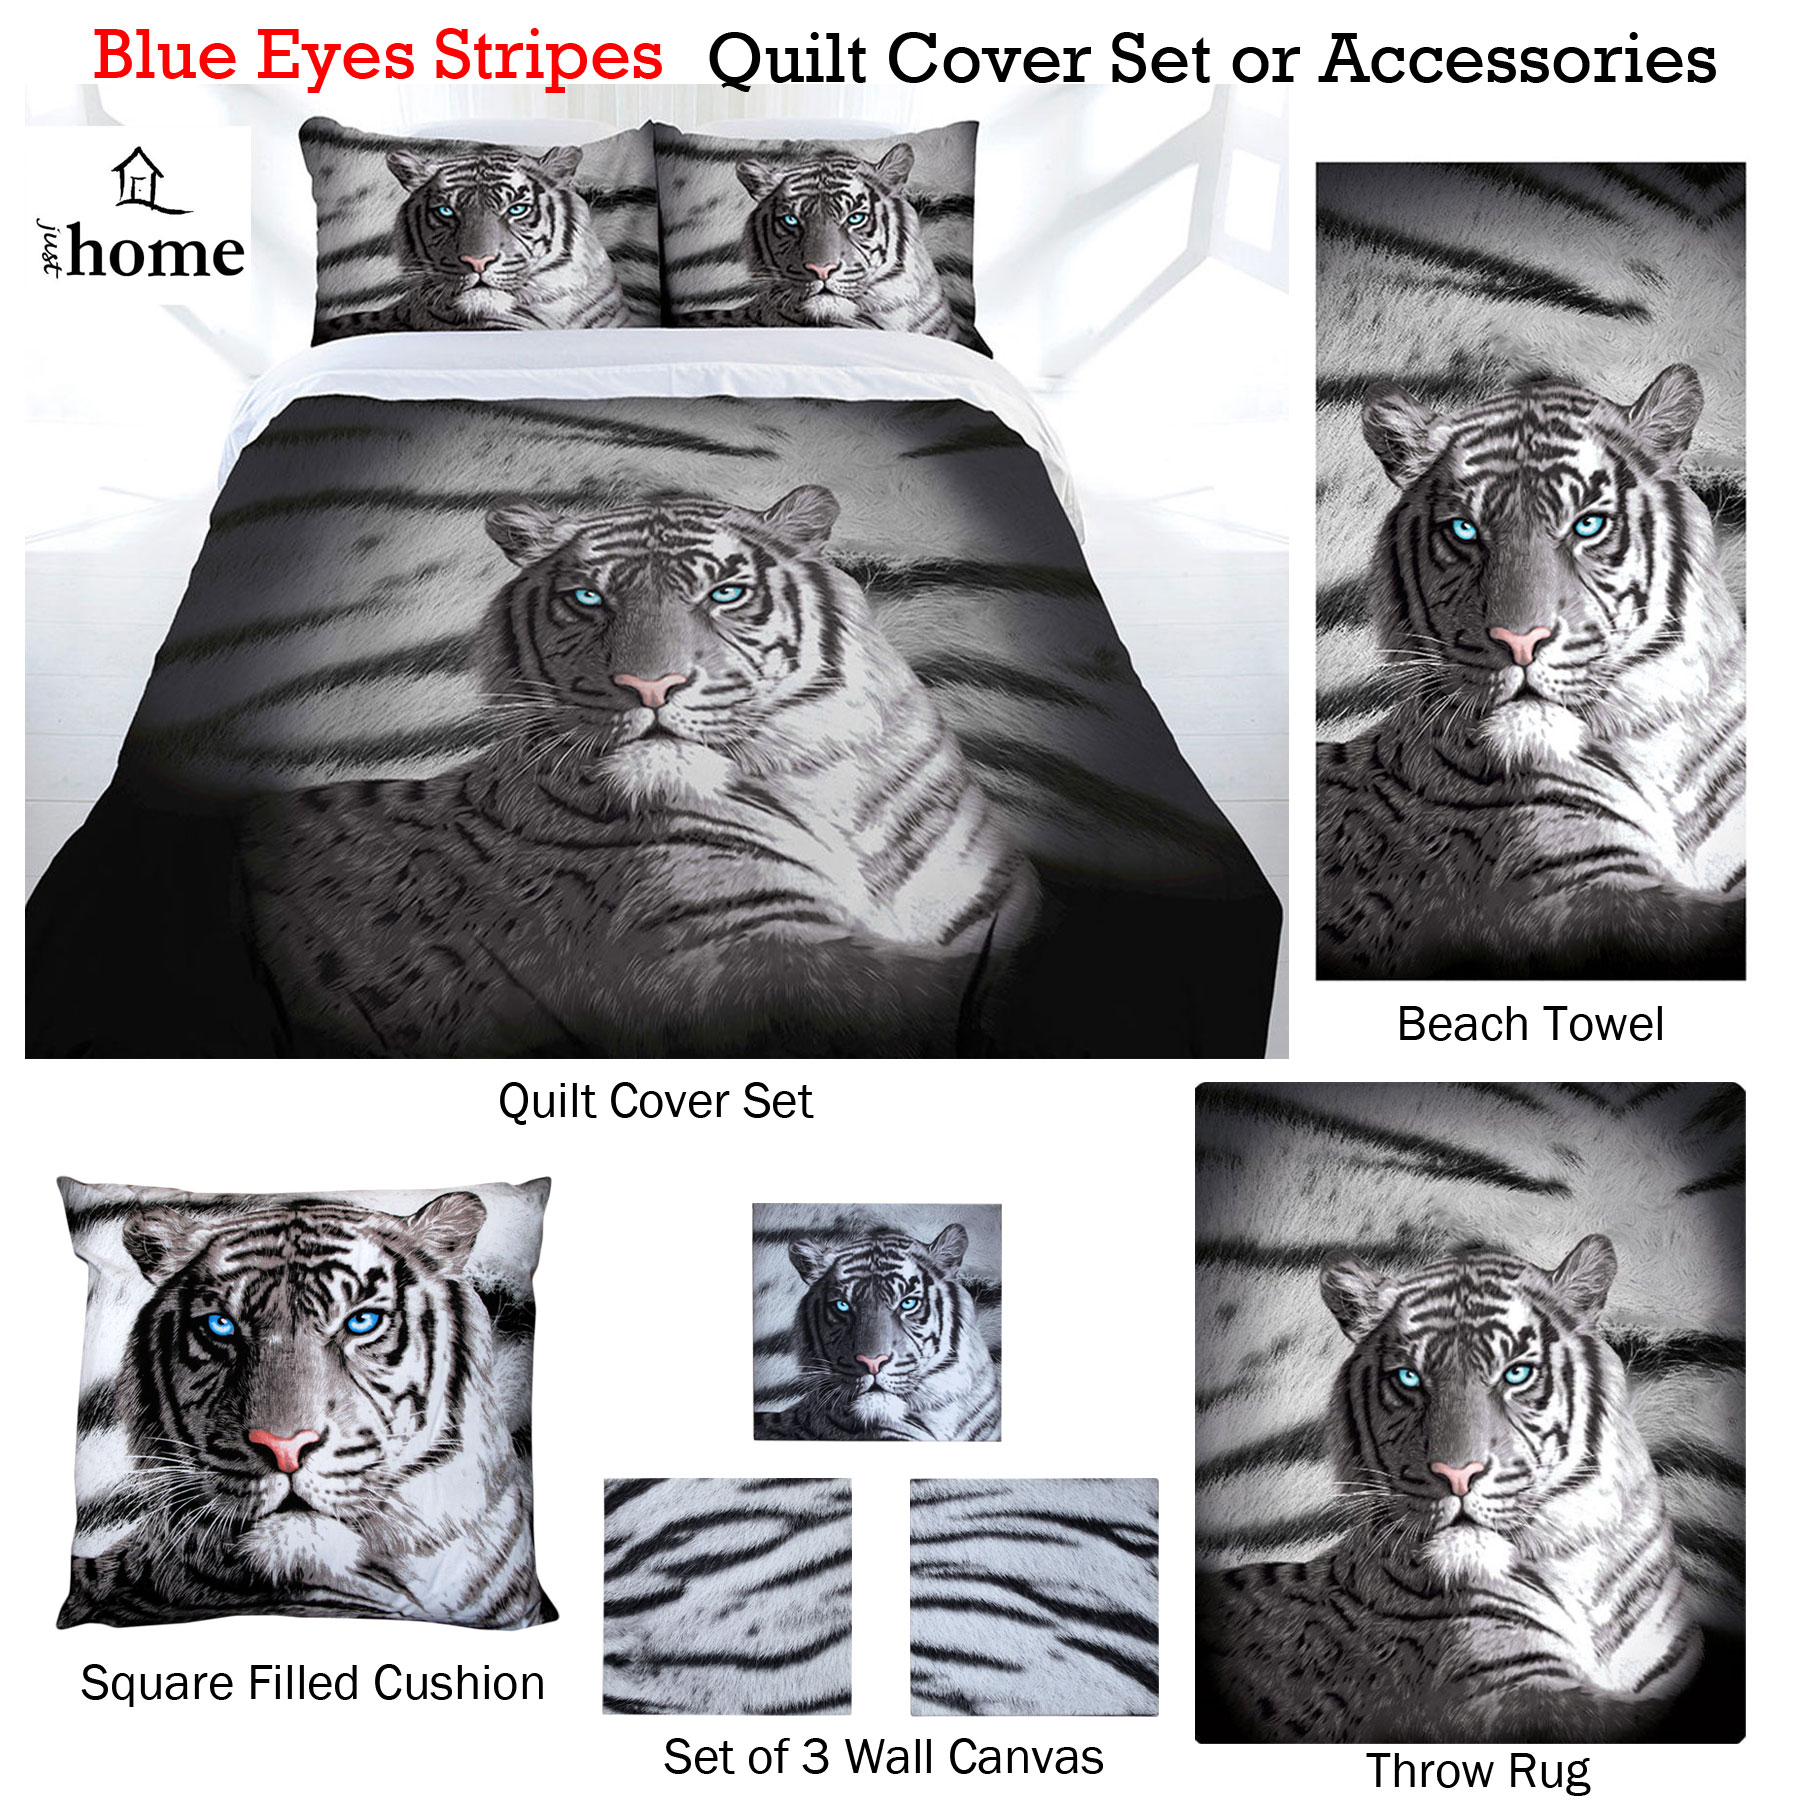 White Tiger DuvetDoona Quilt Cover SetBlue EyesAnimal PrintKing